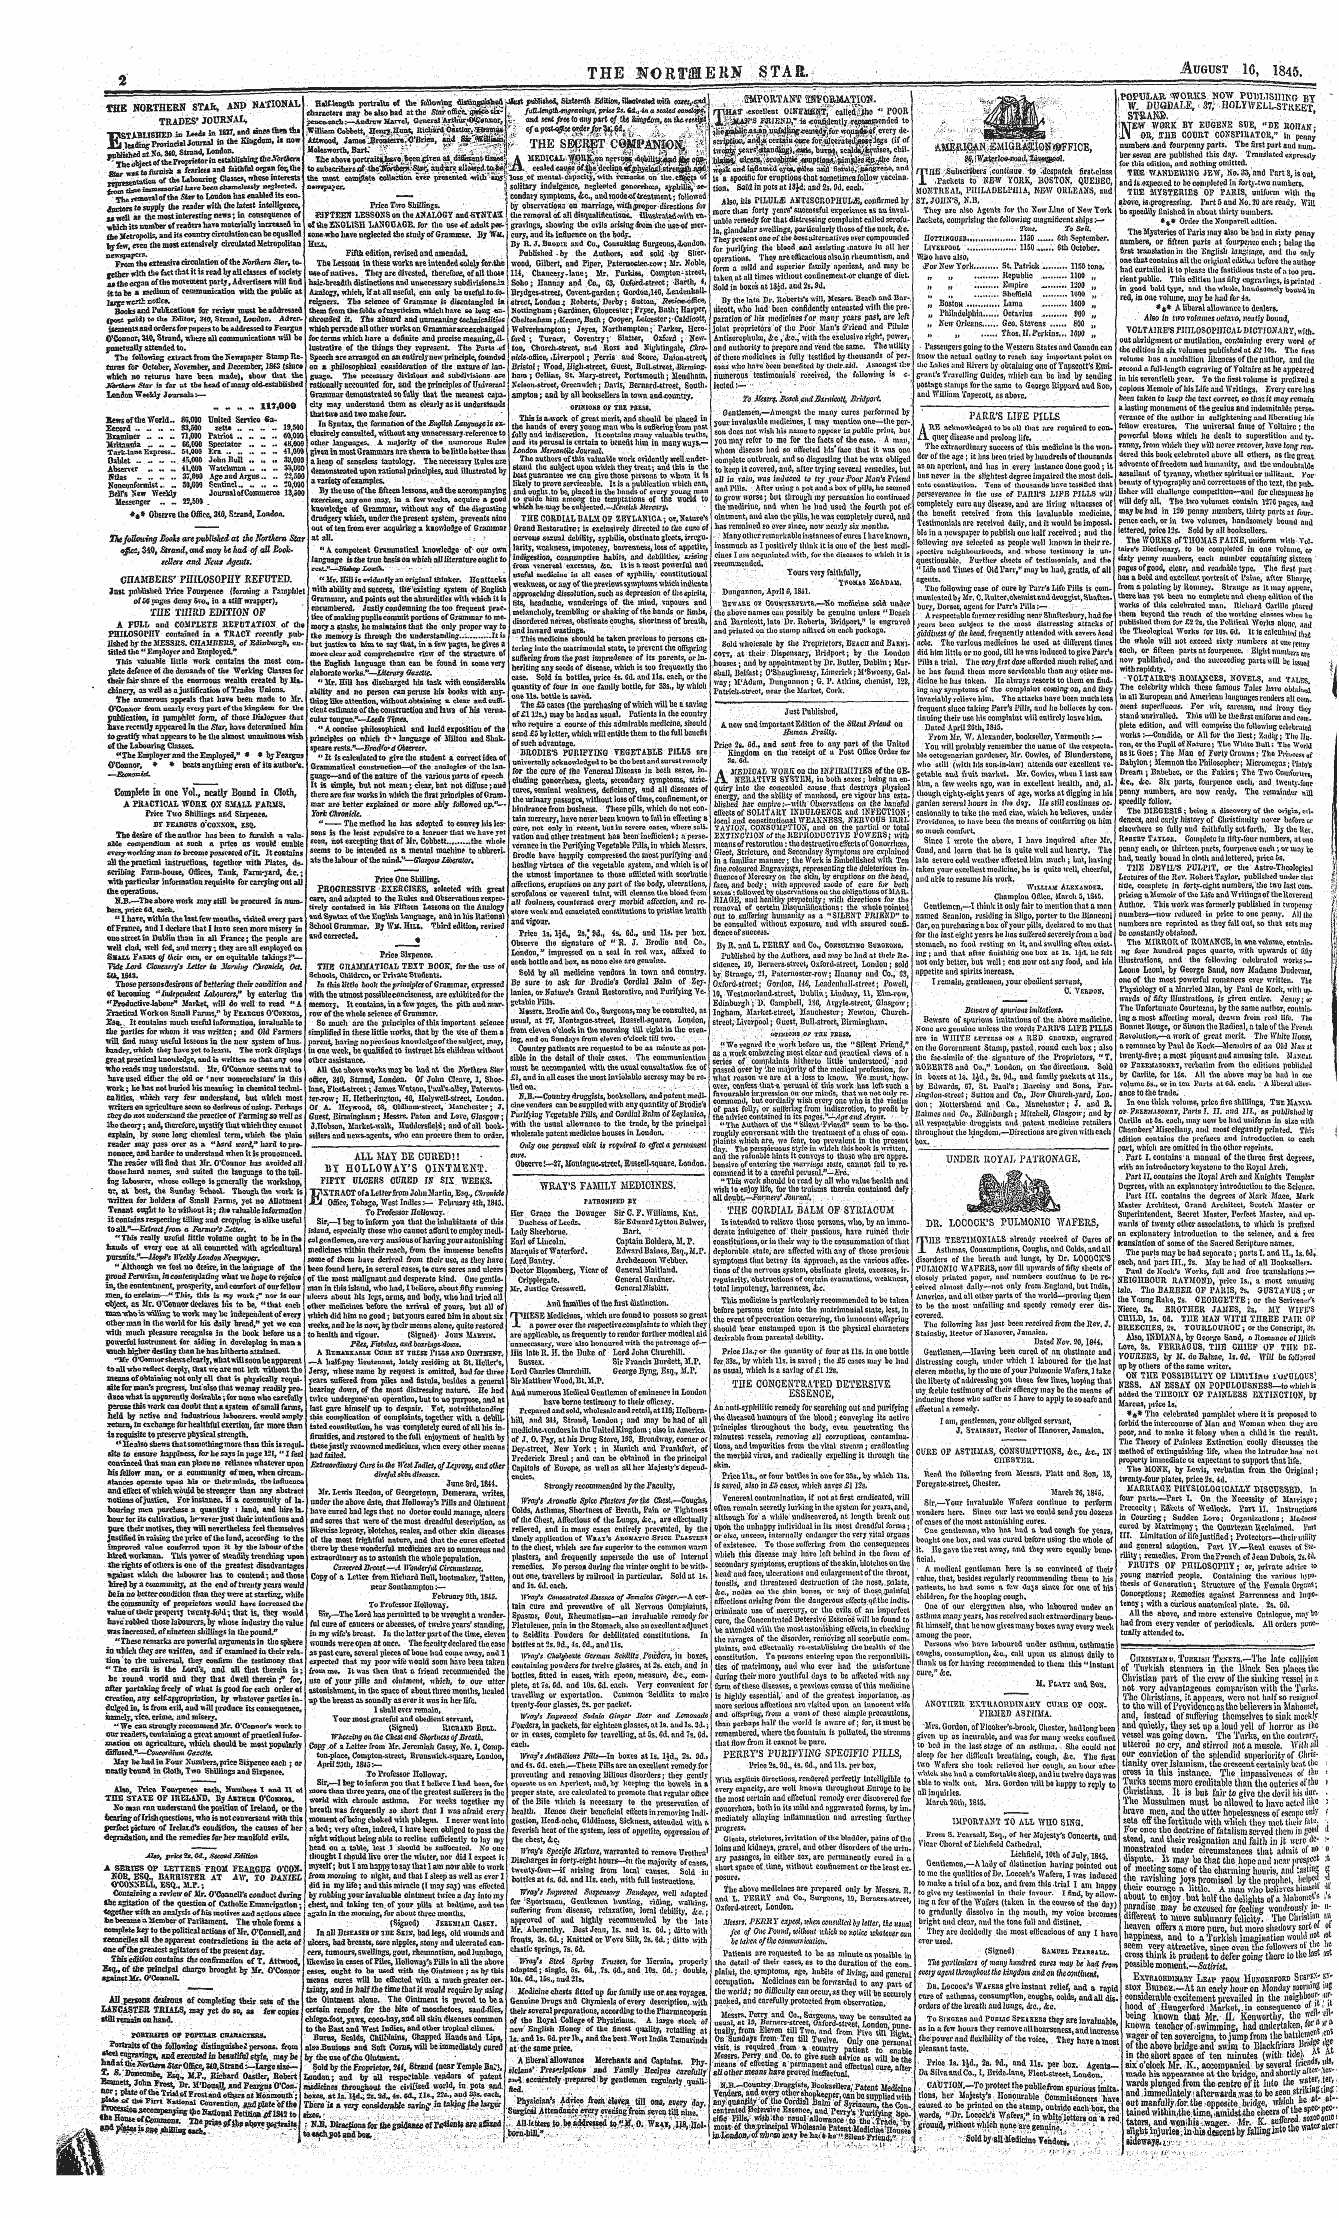 Northern Star (1837-1852): jS F Y, 3rd edition - Ad00217